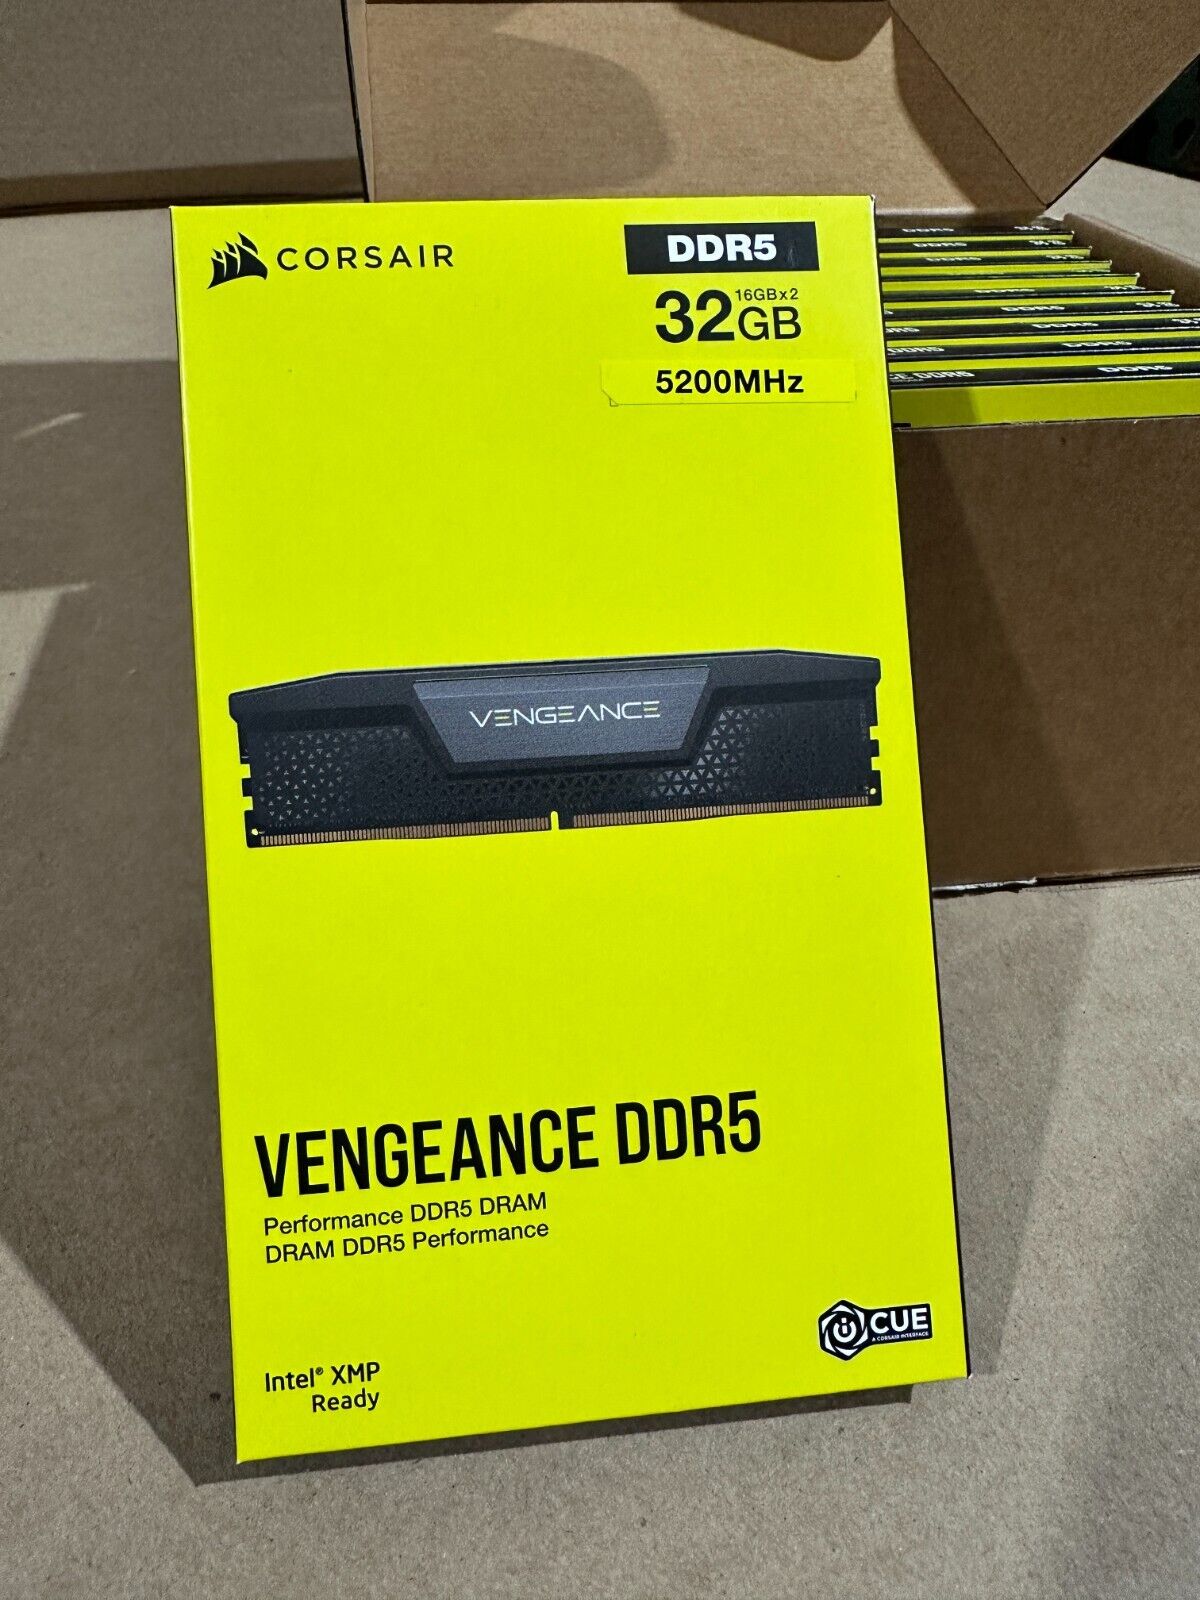 Corsair VENGEANCE DDR5 SDRAM 32GB Kit  5200mhz (2x16GB) - Brand New sealed